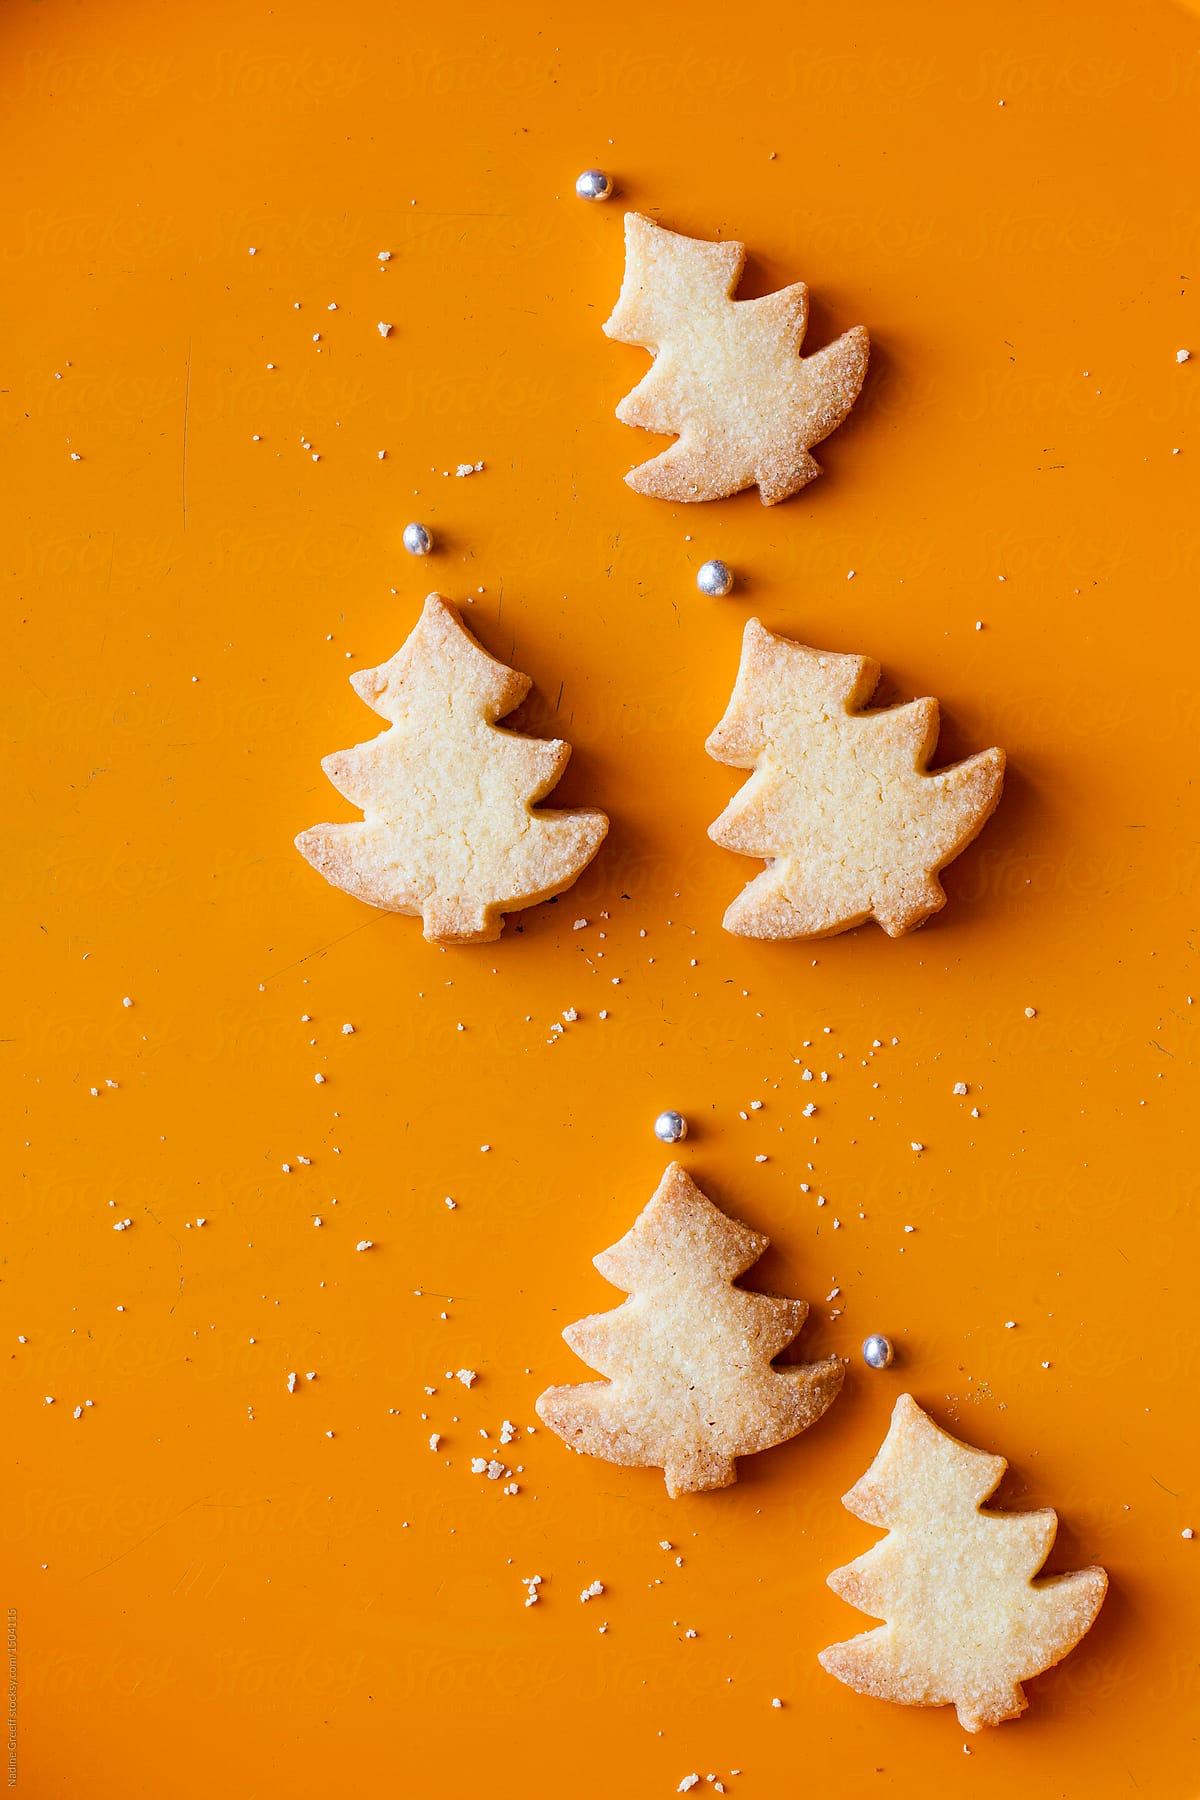 "Christmas Tree Cookies Copy Space" by Stocksy Contributor "Nadine ...